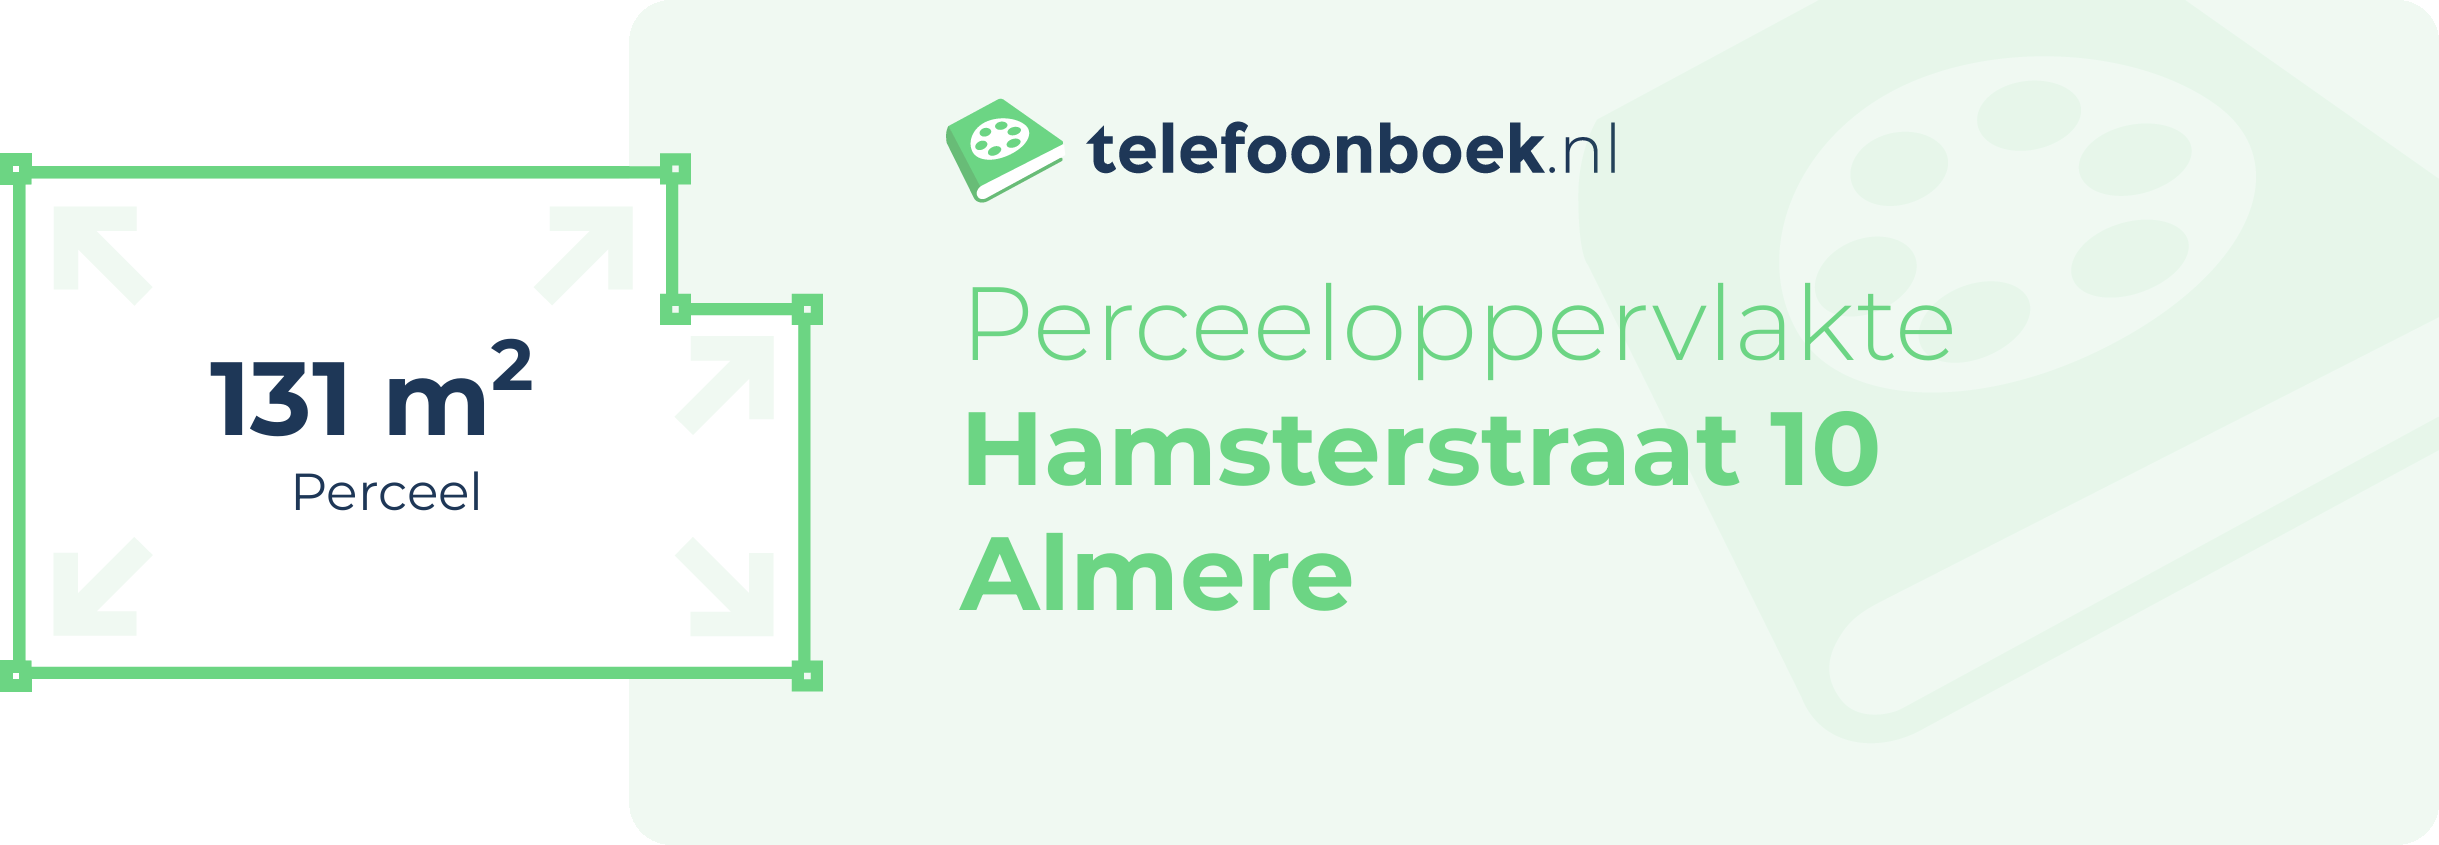 Perceeloppervlakte Hamsterstraat 10 Almere